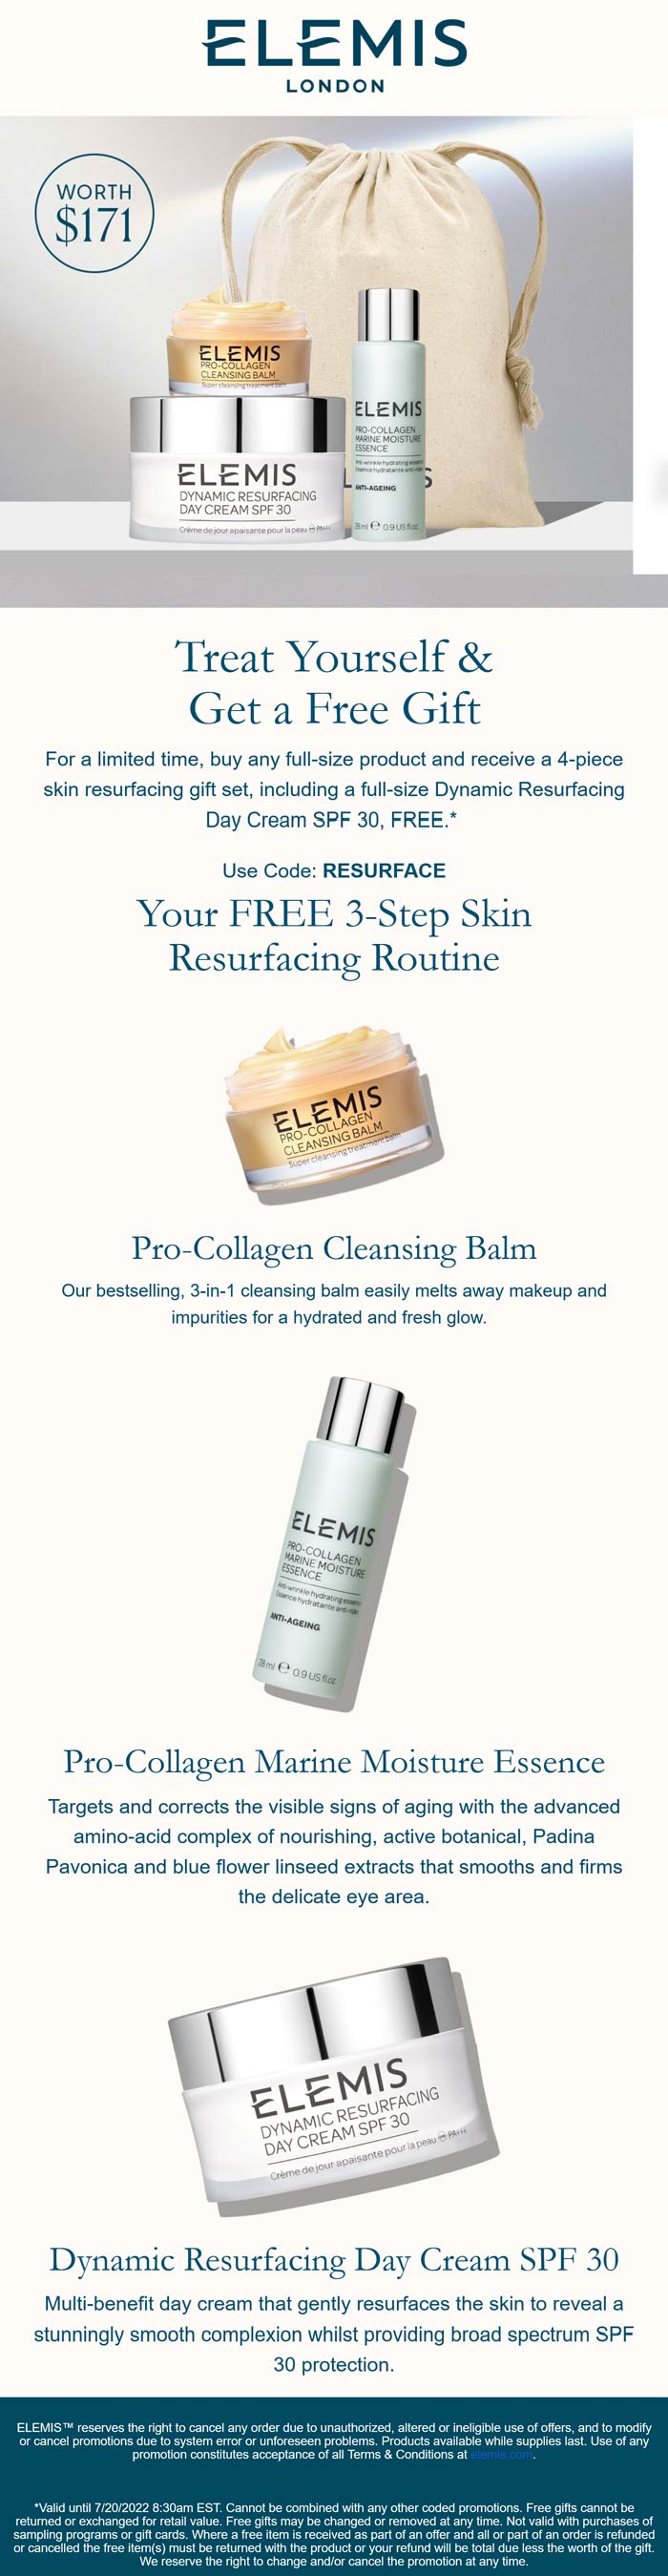 Elemis stores Coupon  Free 4pc skin set with any full-size product at Elemis via promo code RESURFACE #elemis 